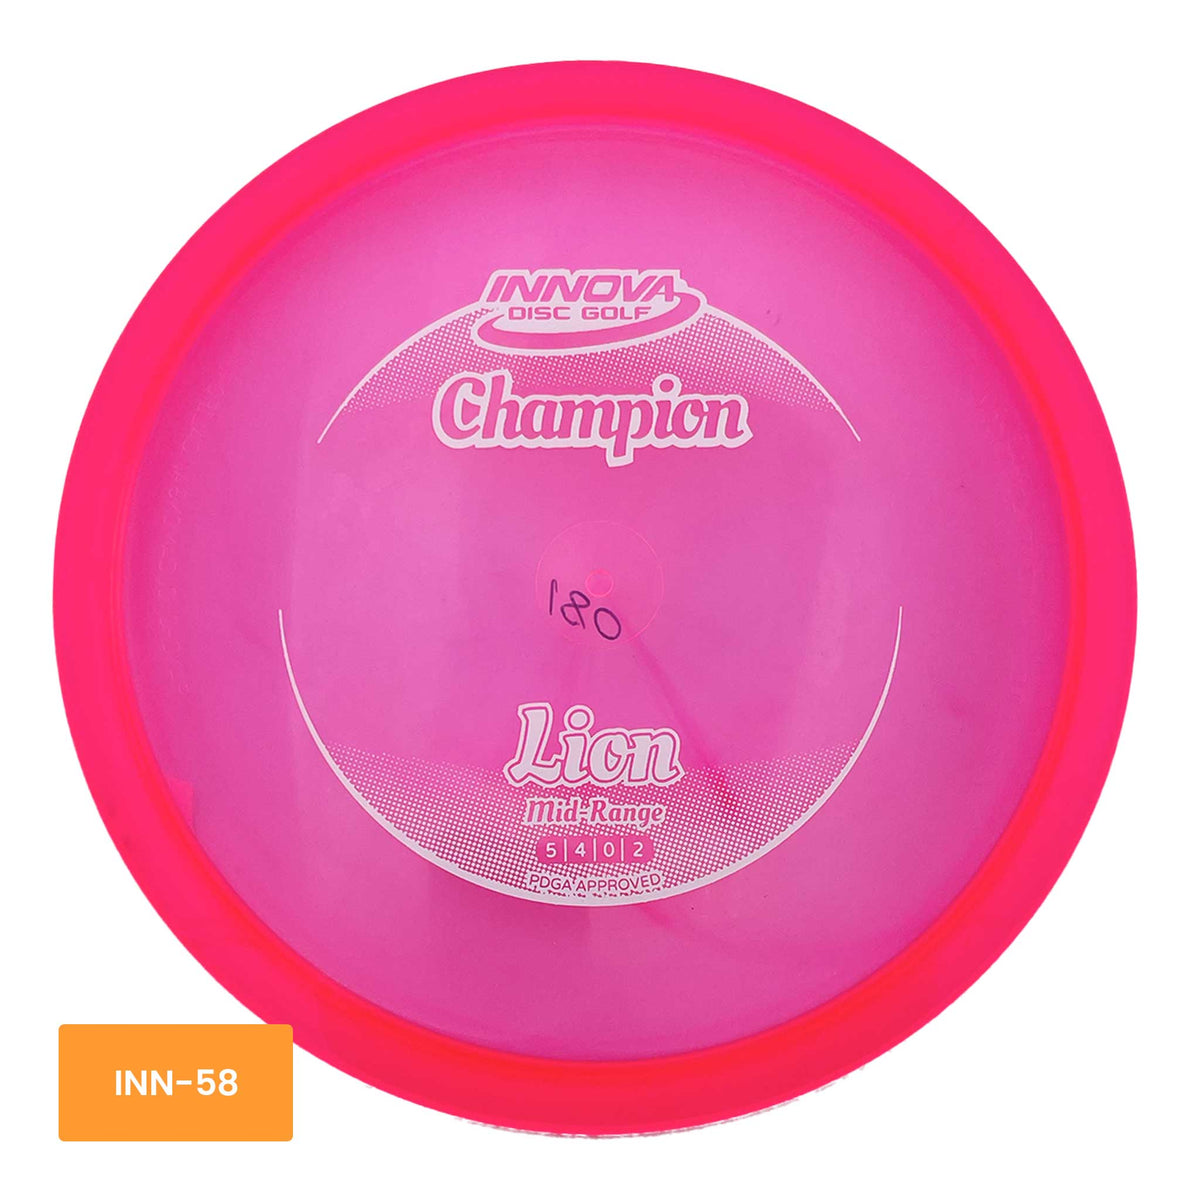 Innova Disc Golf Champion Lion midrange - Pink